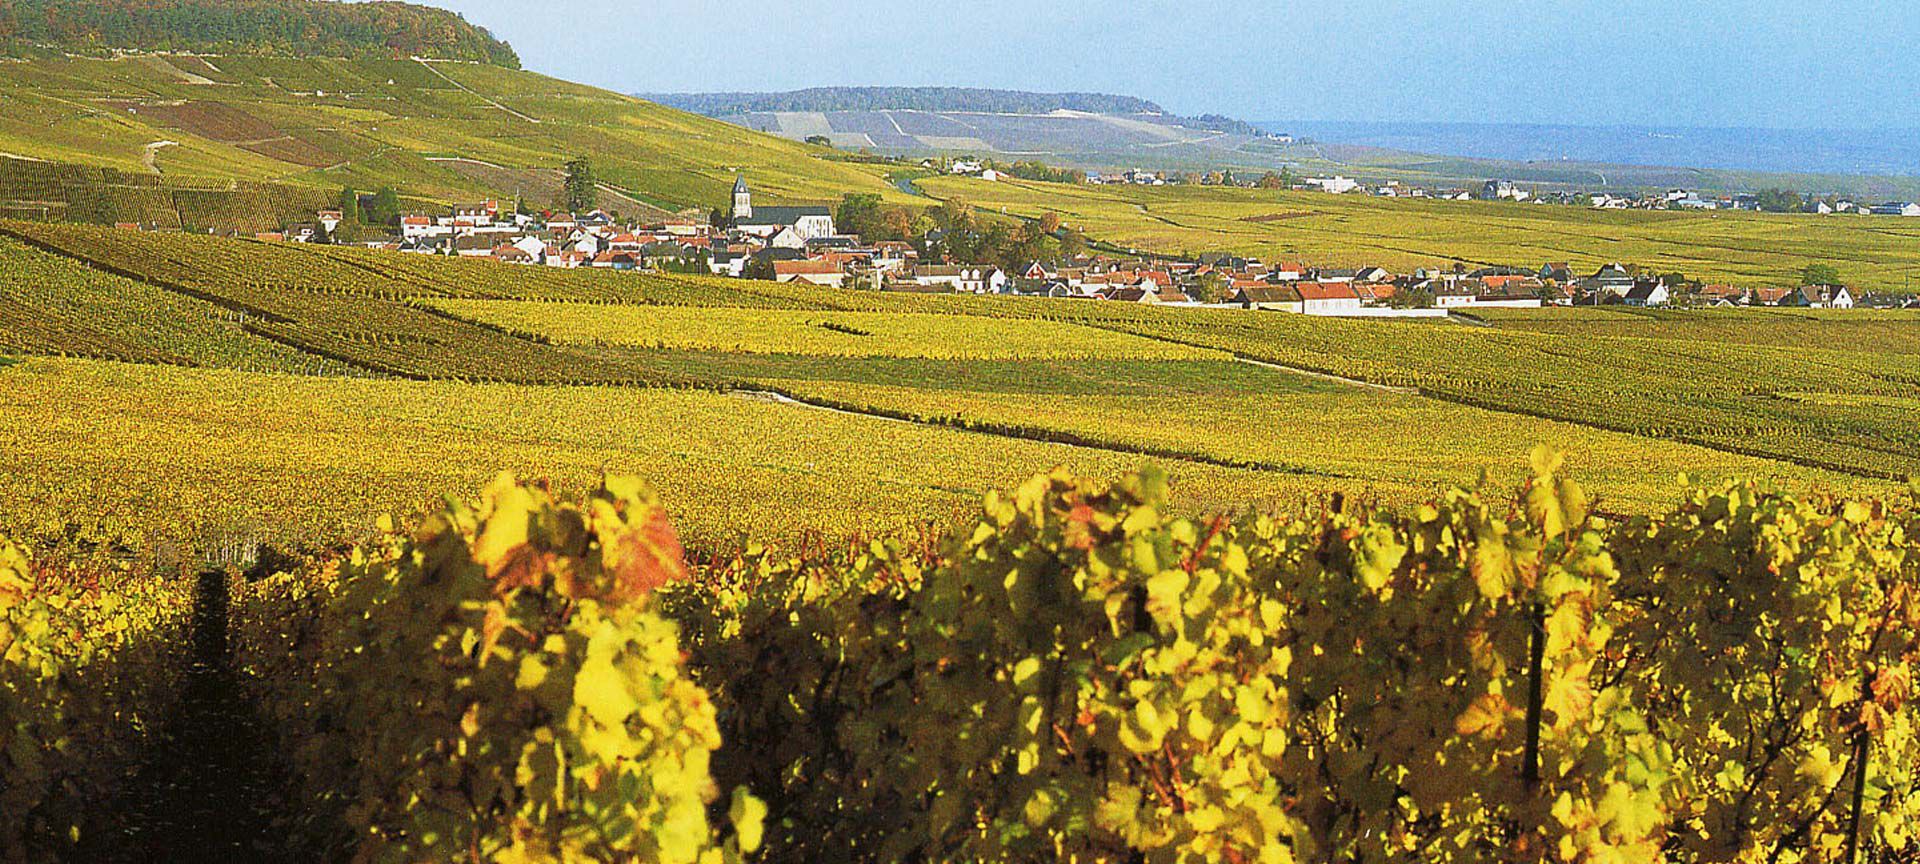  Palatinate wine region Germany